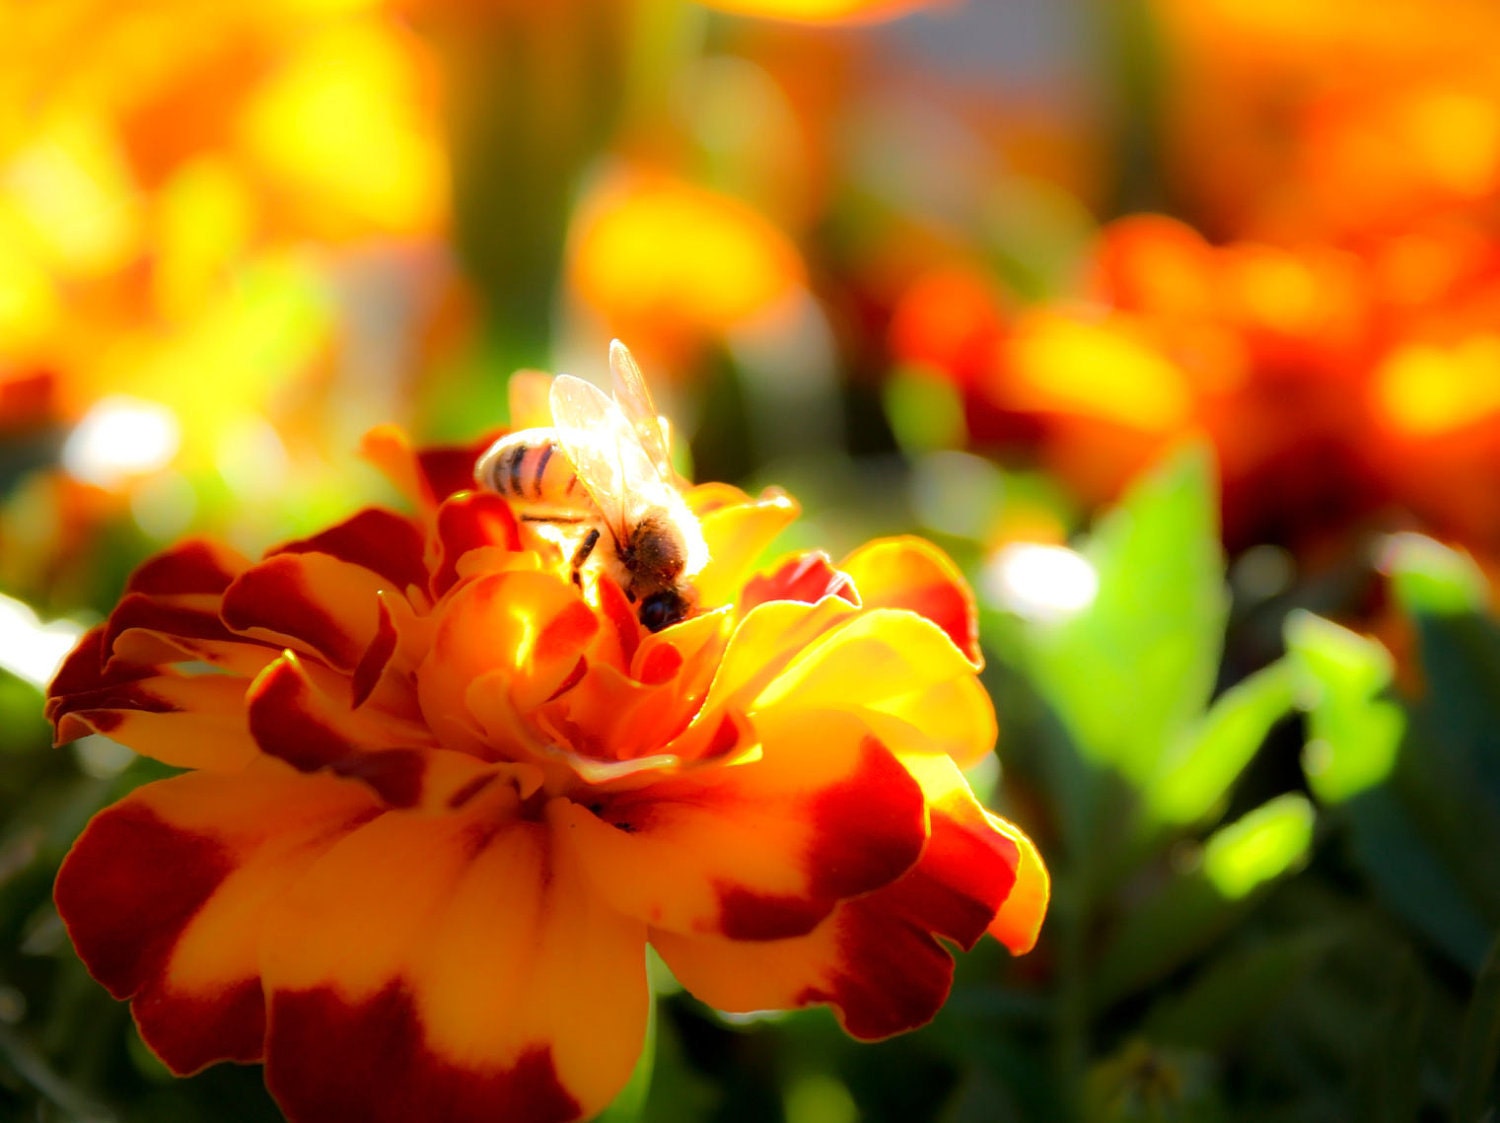 Bee and Marigolds